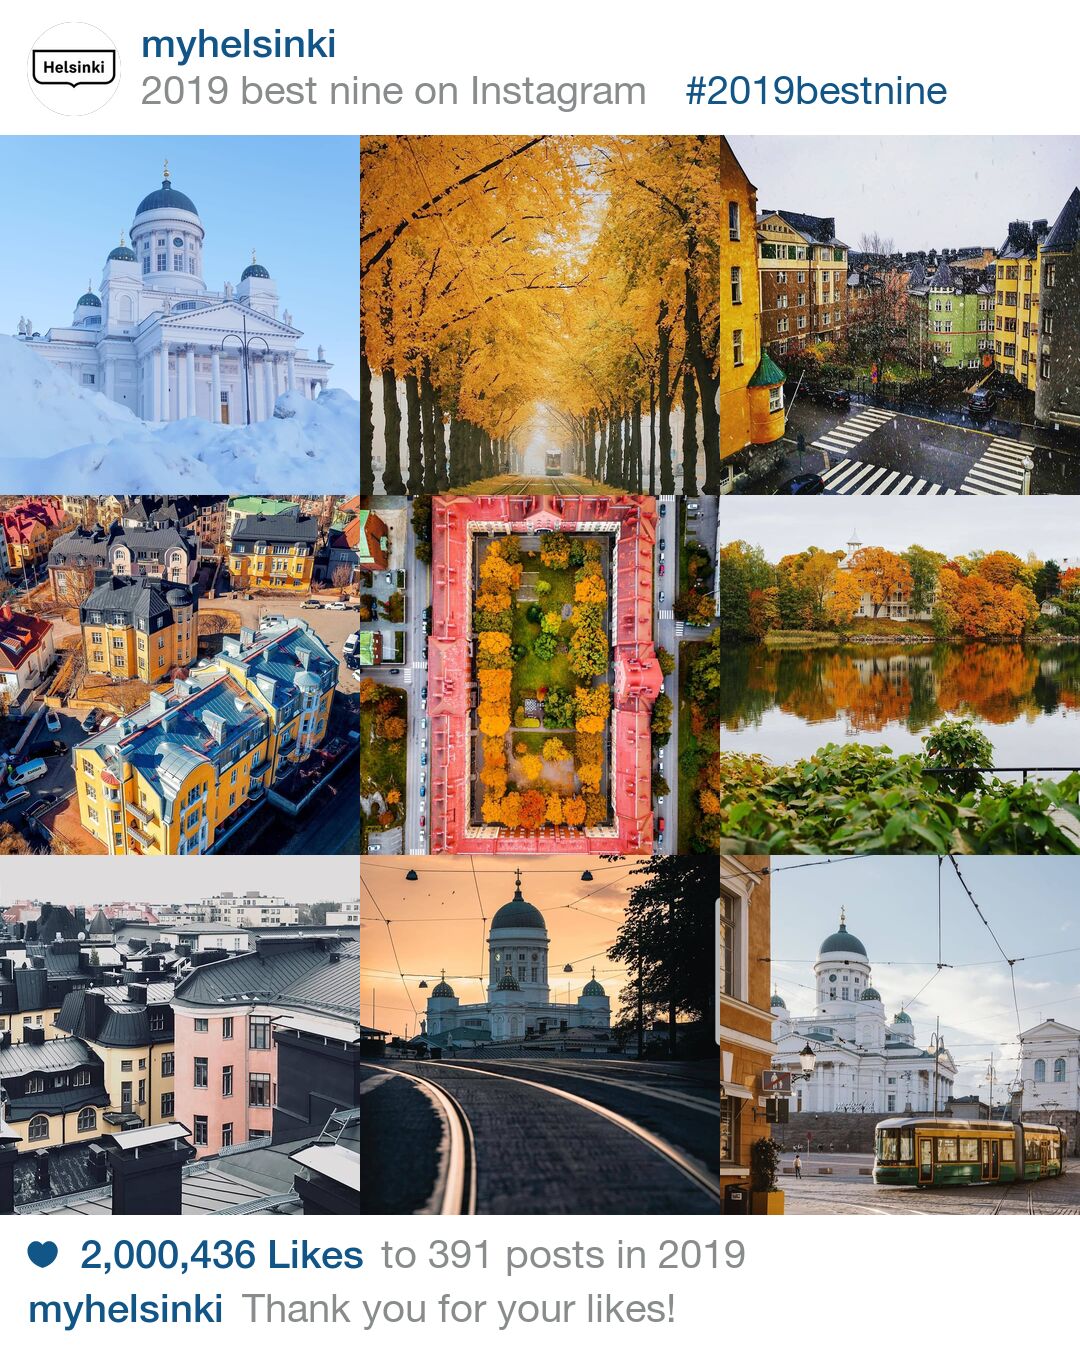 Visit Helsinki Instagram ranking 2019 best nine Finland